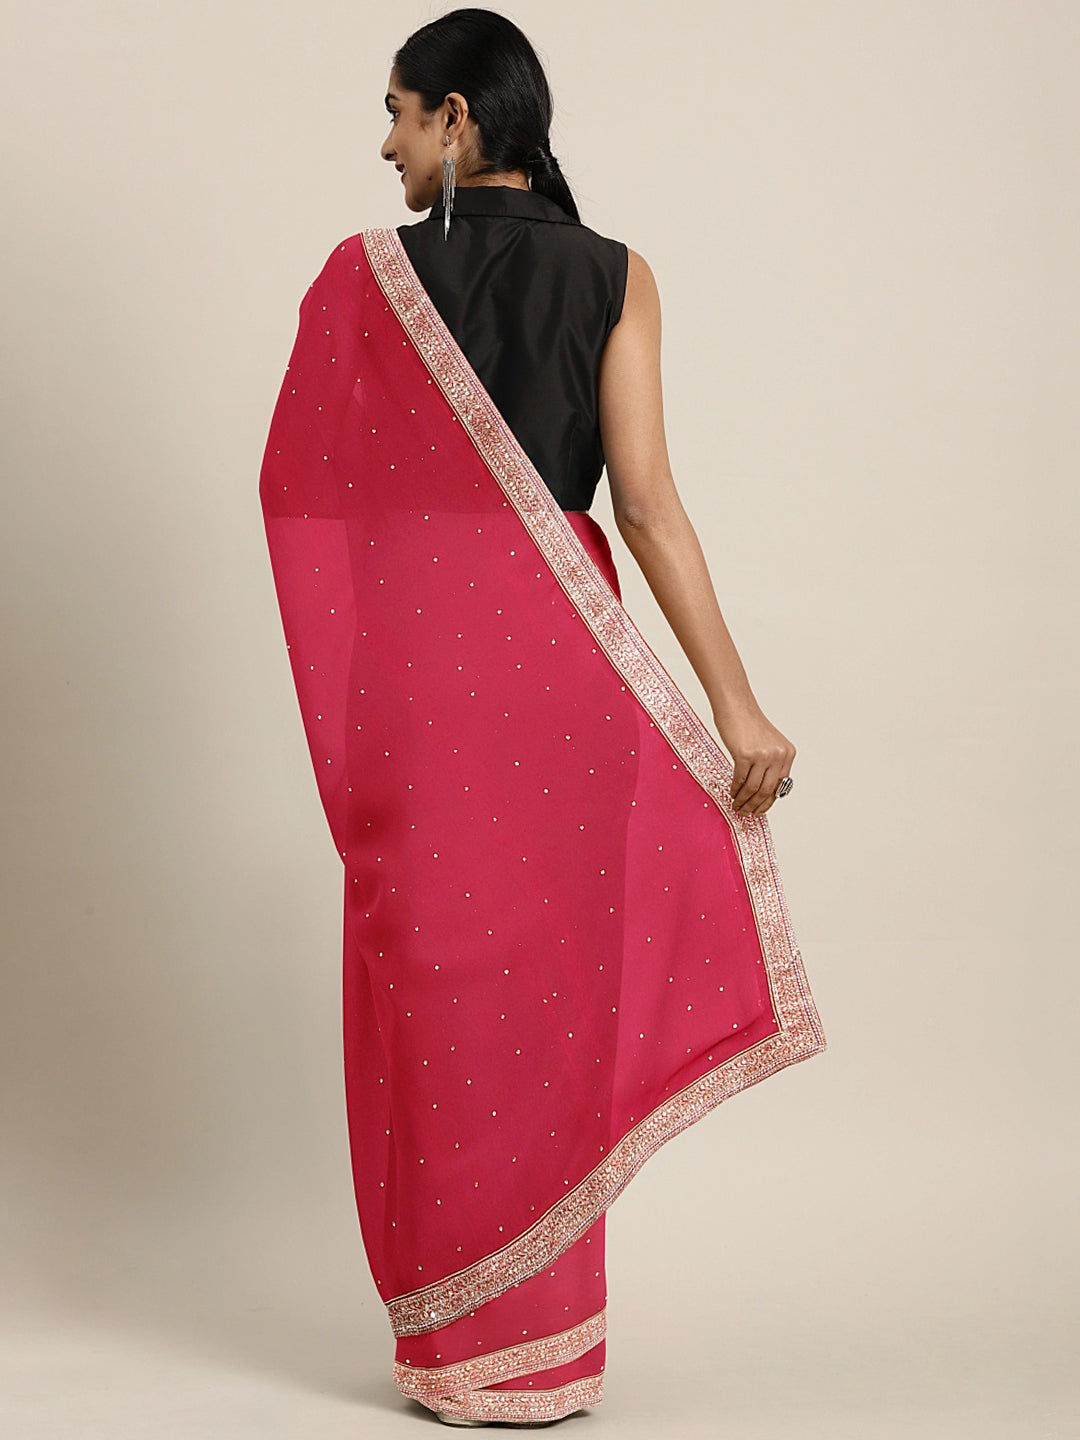 Neeru's Pink Embellished Saree With Blouse